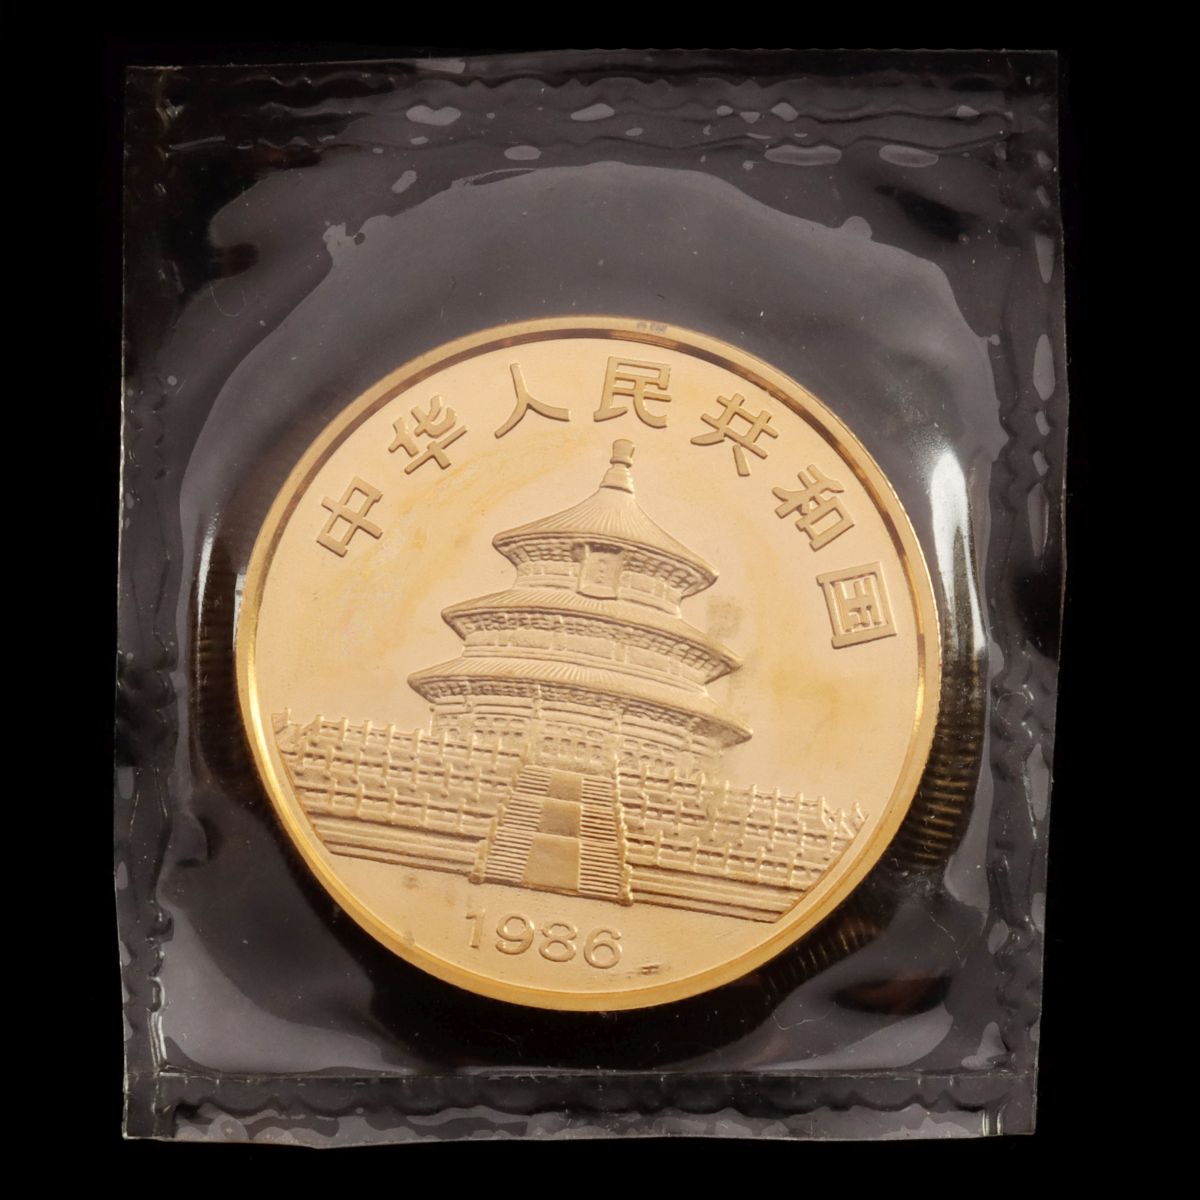 A 1986 CHINESE 1 OZ. GOLD PANDA COIN